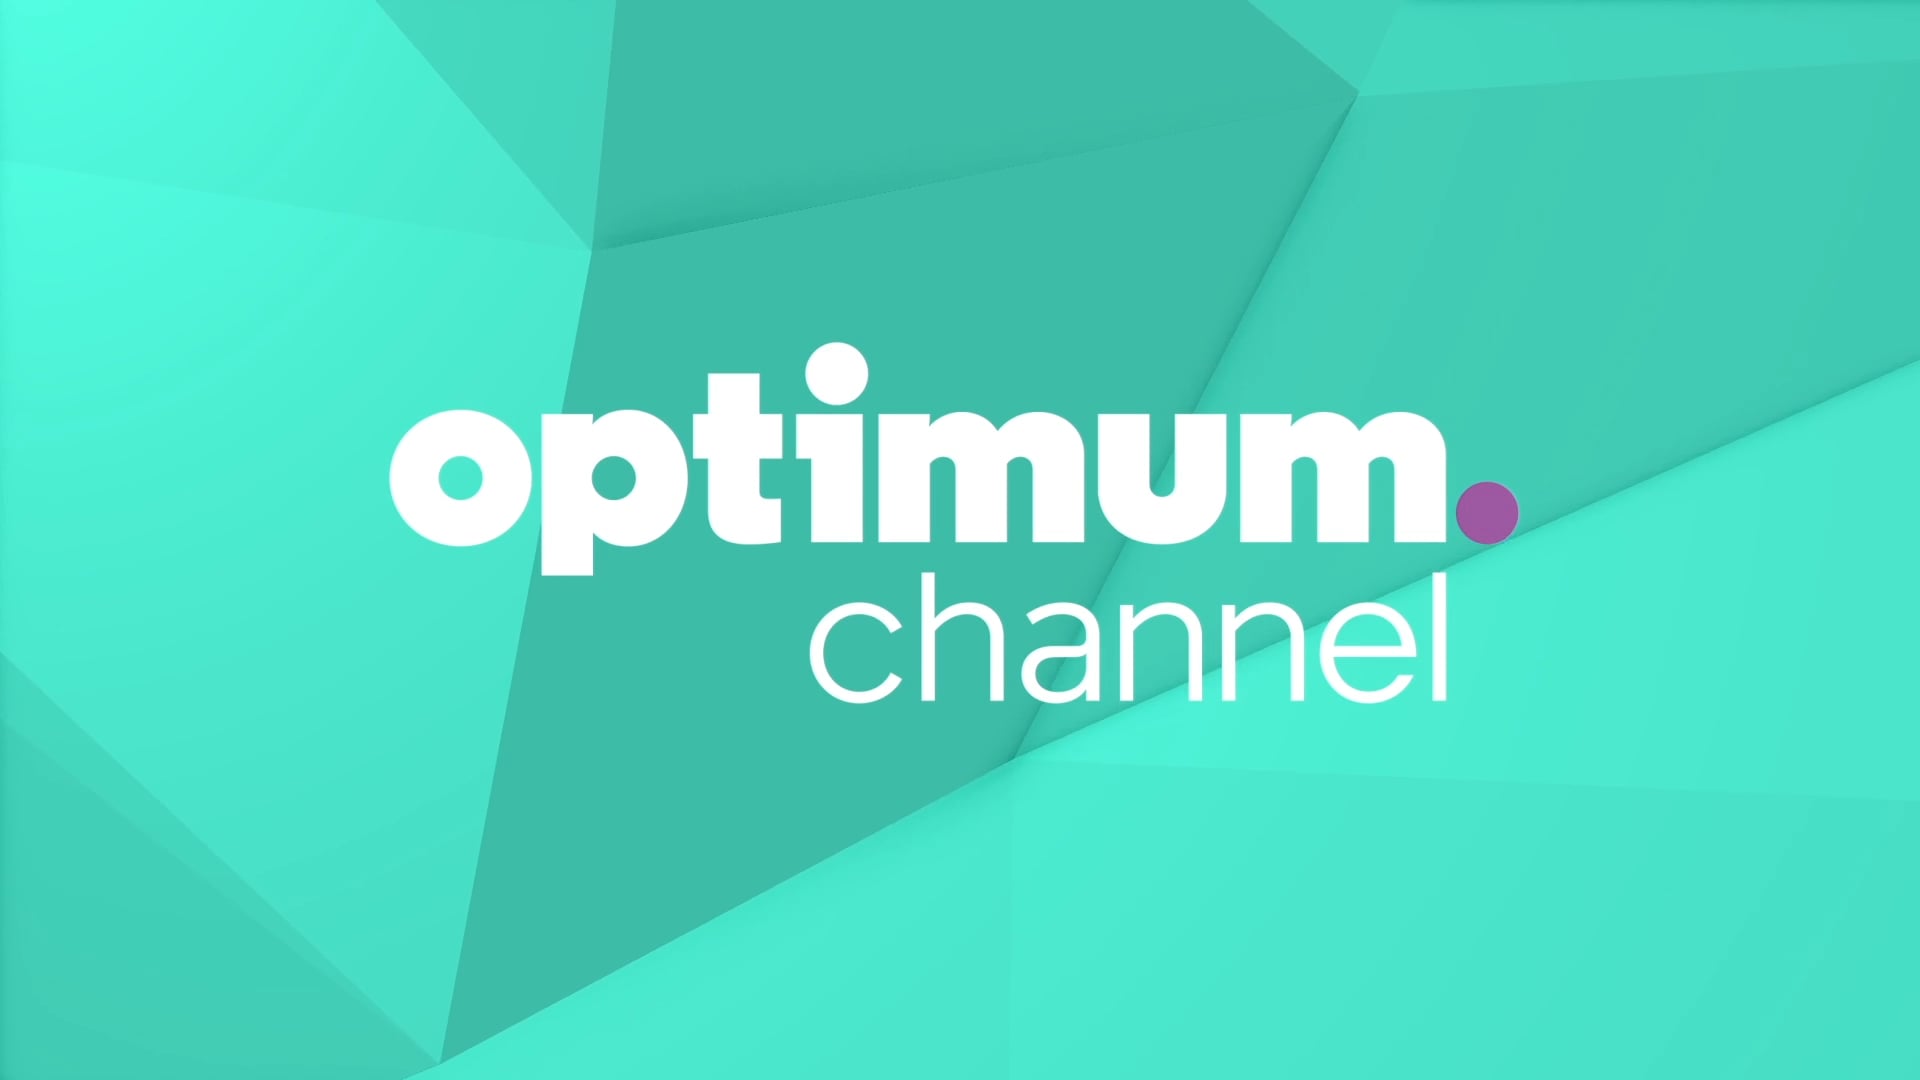 Optimum Channel- Teal Origami